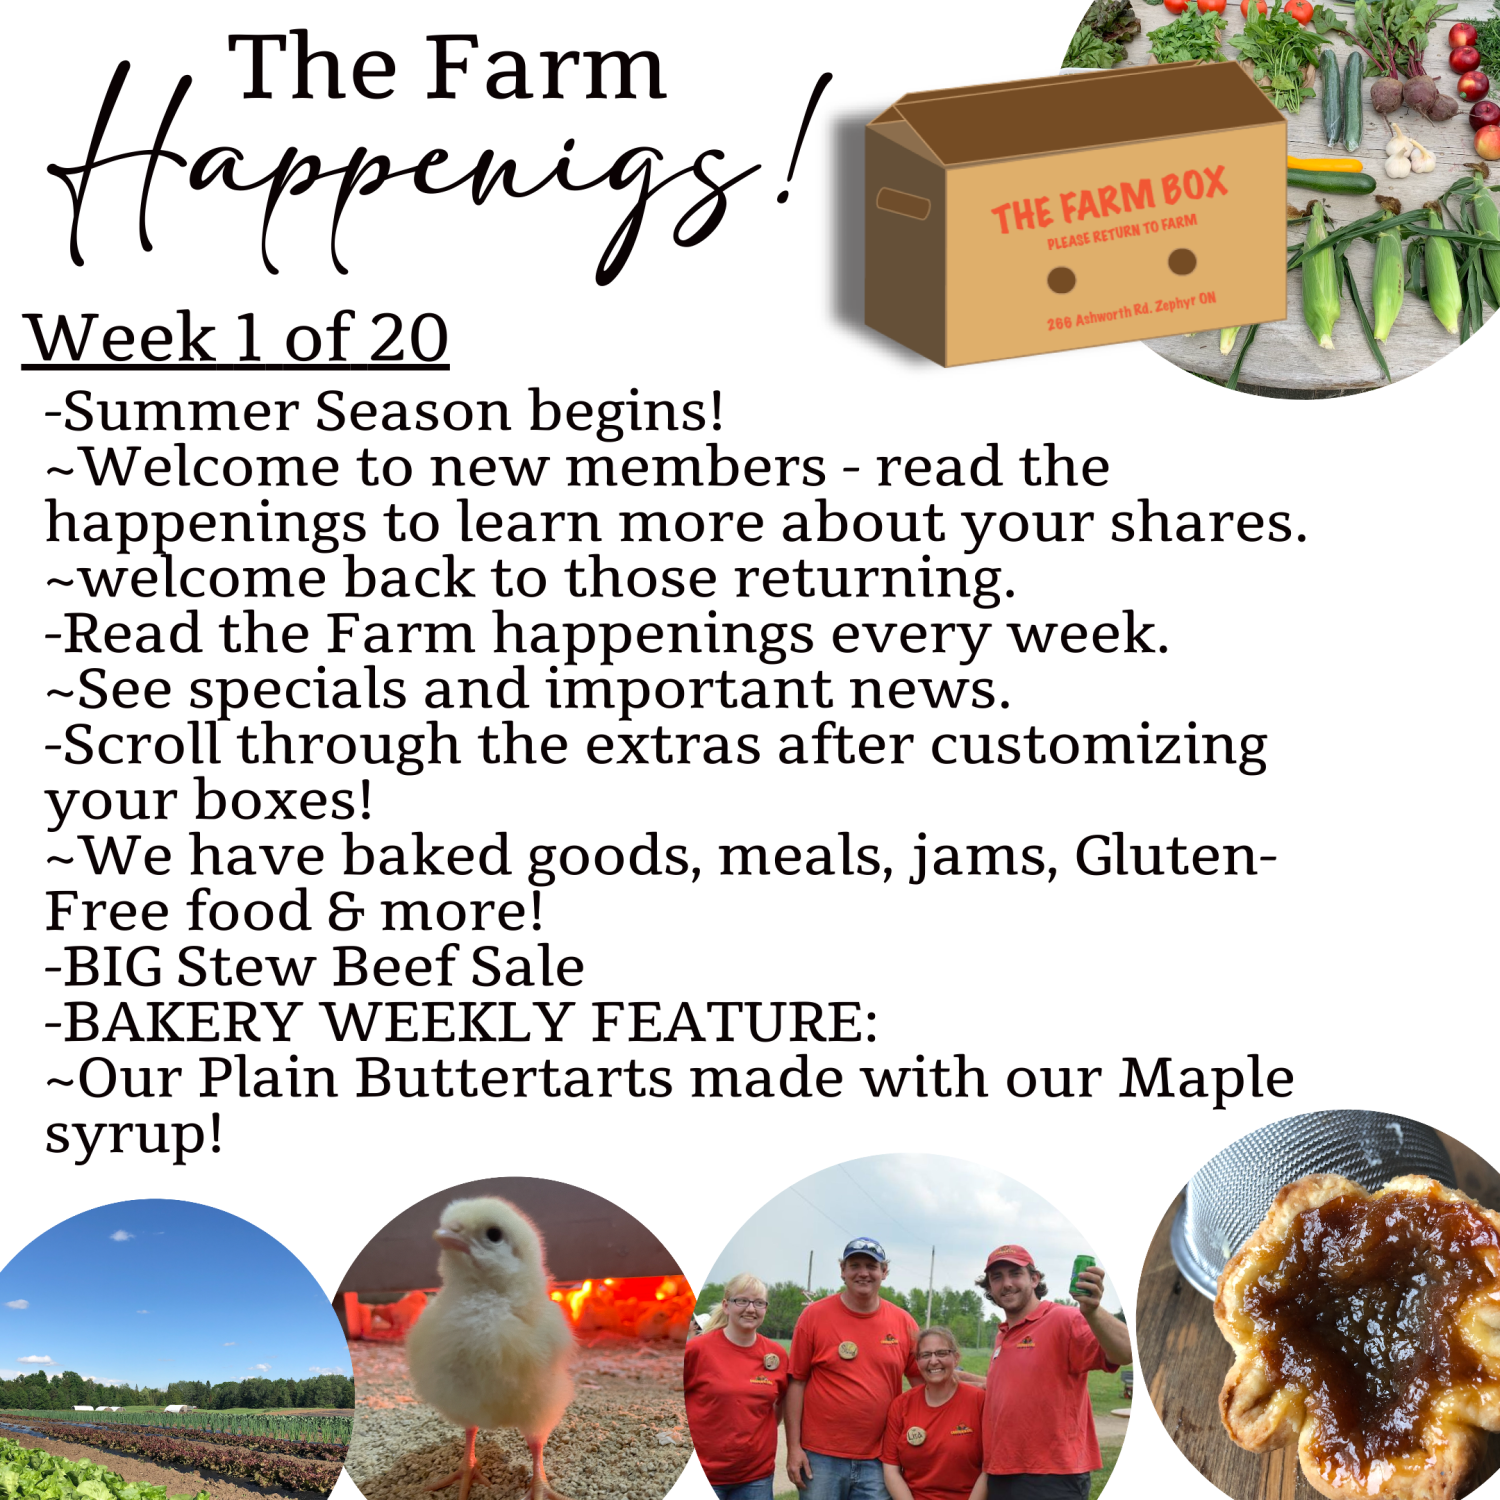 "The Farm Box"-Coopers CSA Farm Farm Happenings: Week 1 of 20